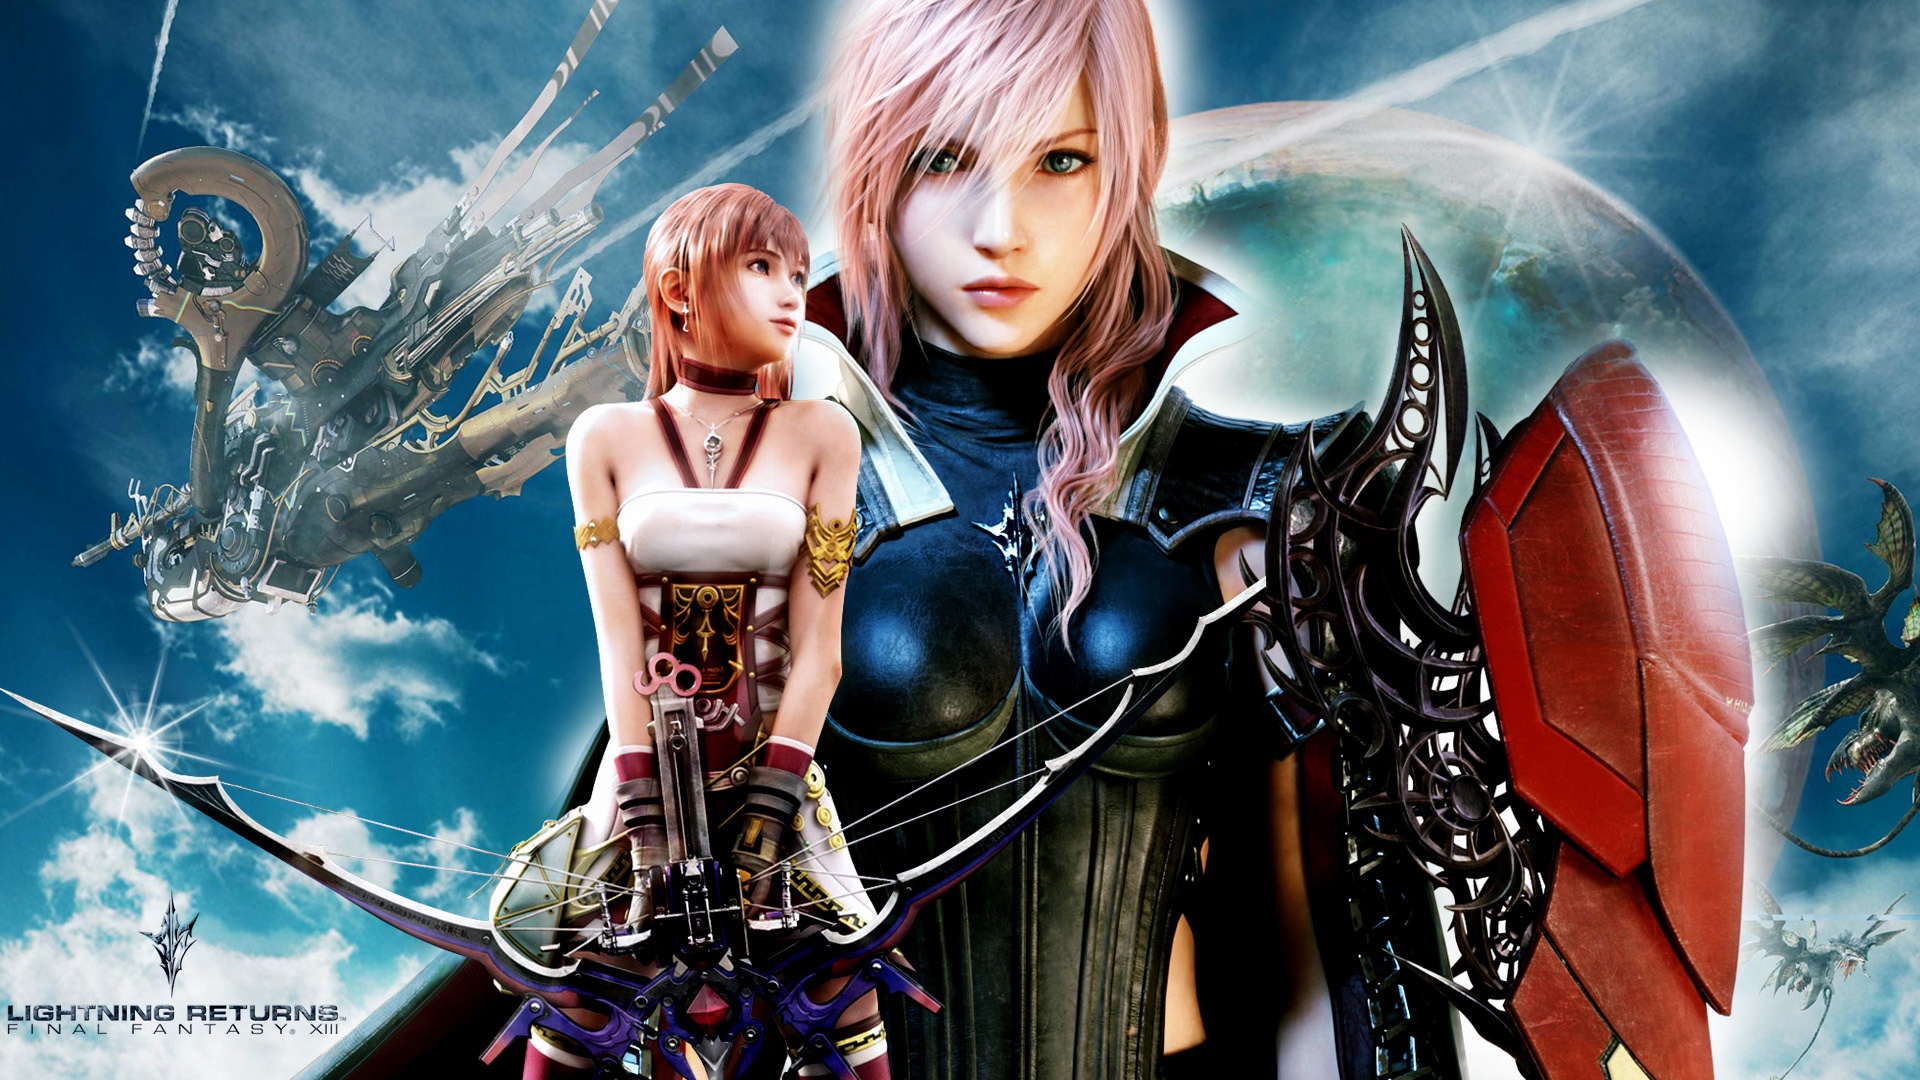 Final Fantasy Xiii HD 1080p Wallpaper Source